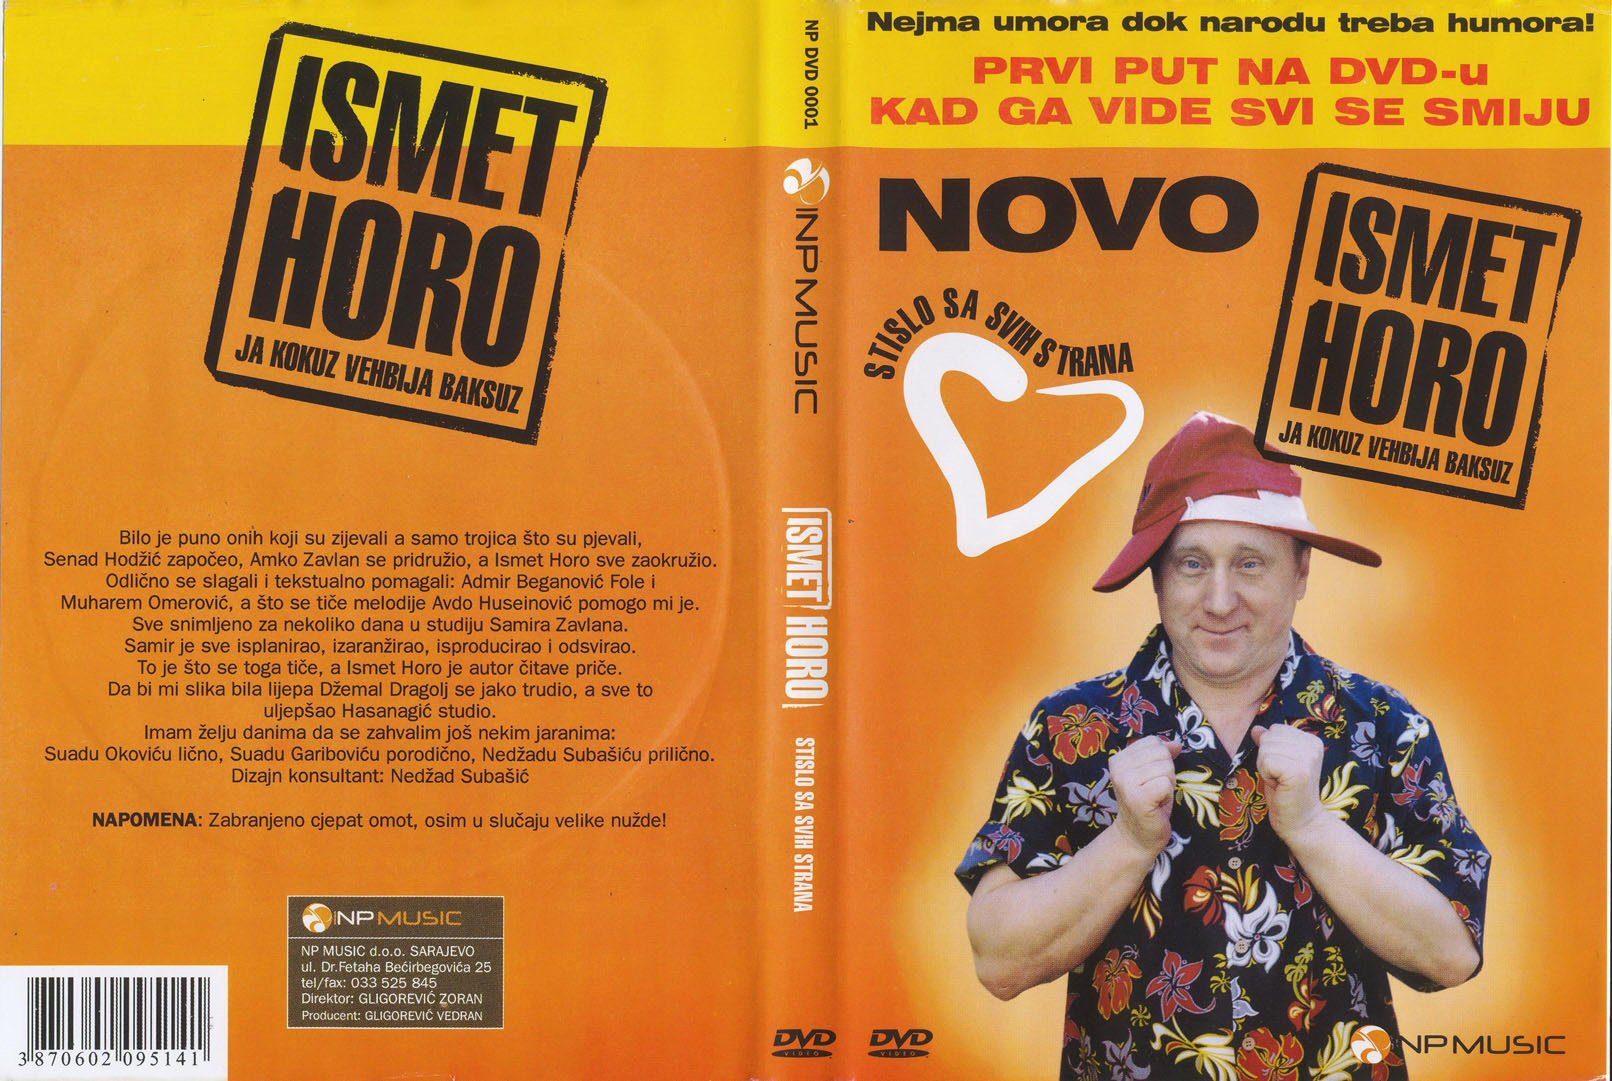 Click to view full size image -  DVD Cover - I - ismet_horo_ja_kokuz_vehbija_baksuz_dvd - ismet_horo_ja_kokuz_vehbija_baksuz_dvd.jpg